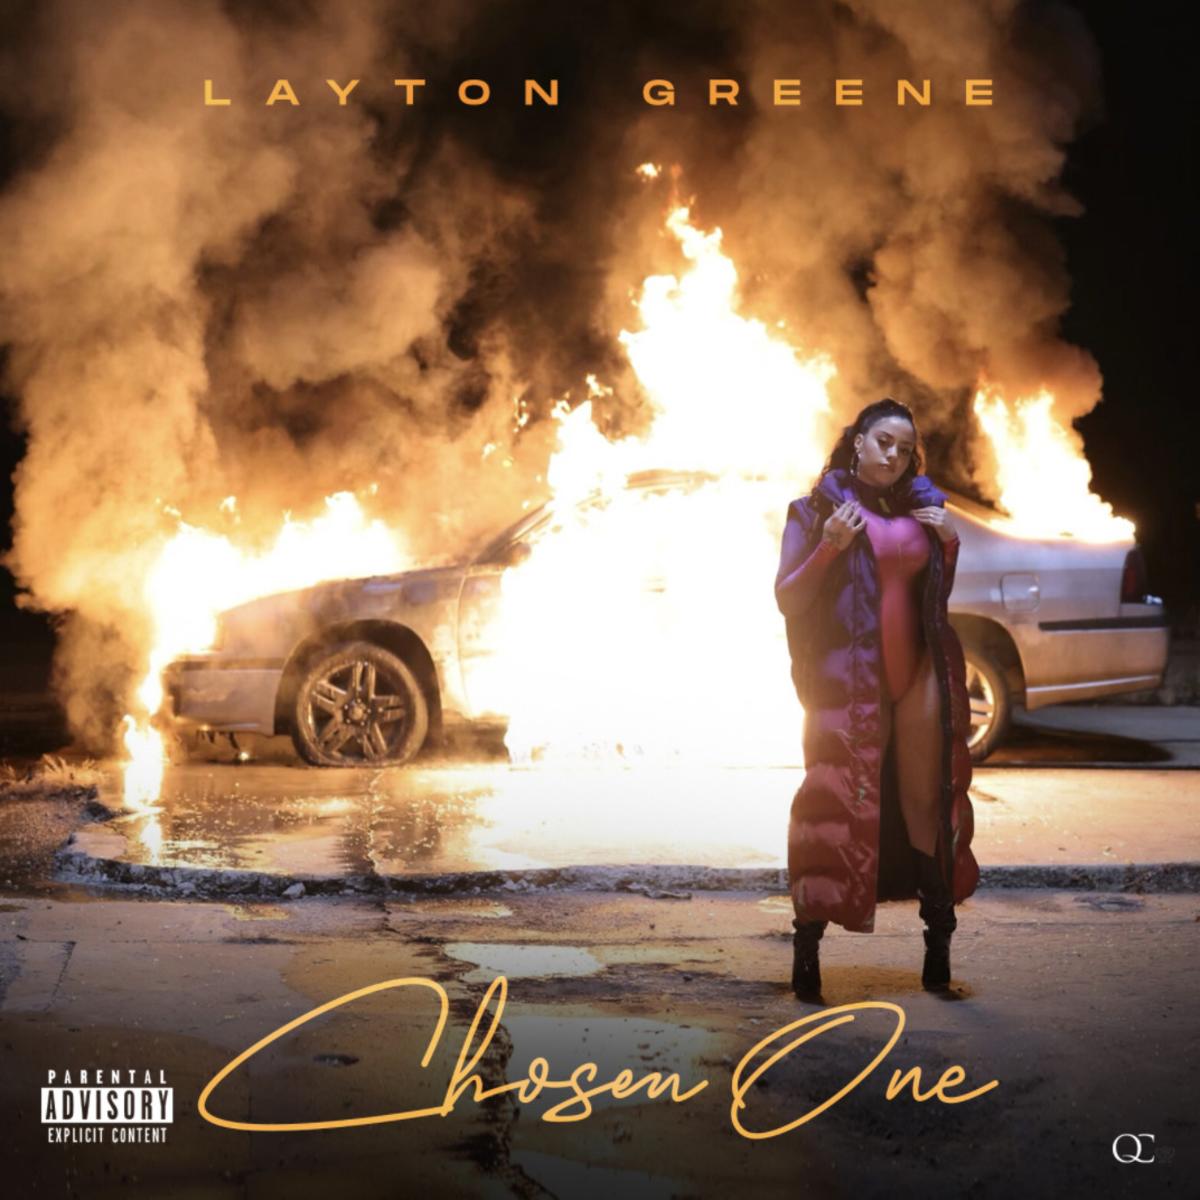 Layton Greene Opens Up Her Heart On “Chosen One”